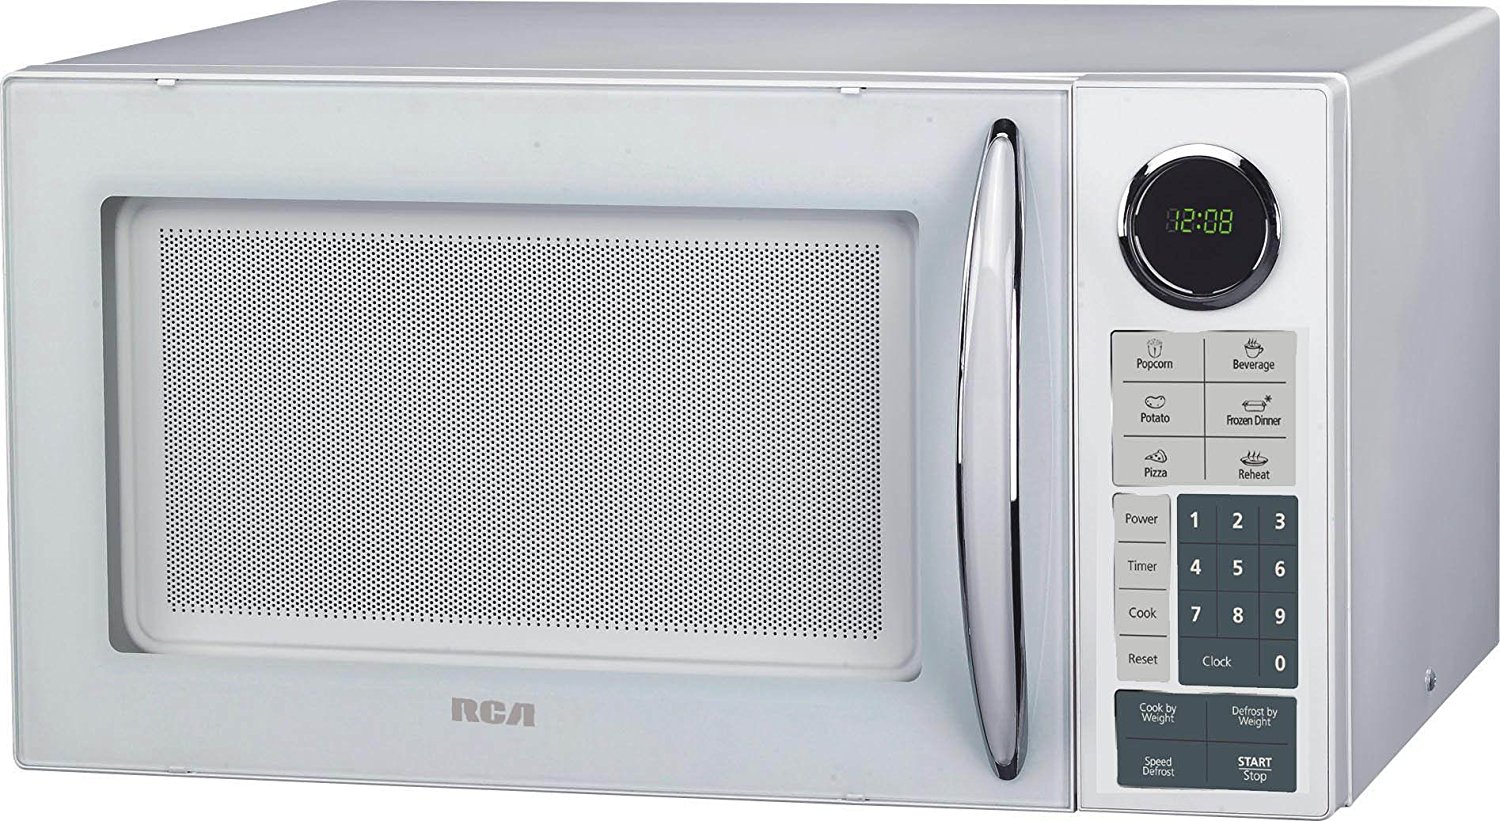 RCA 953 Microwave, White